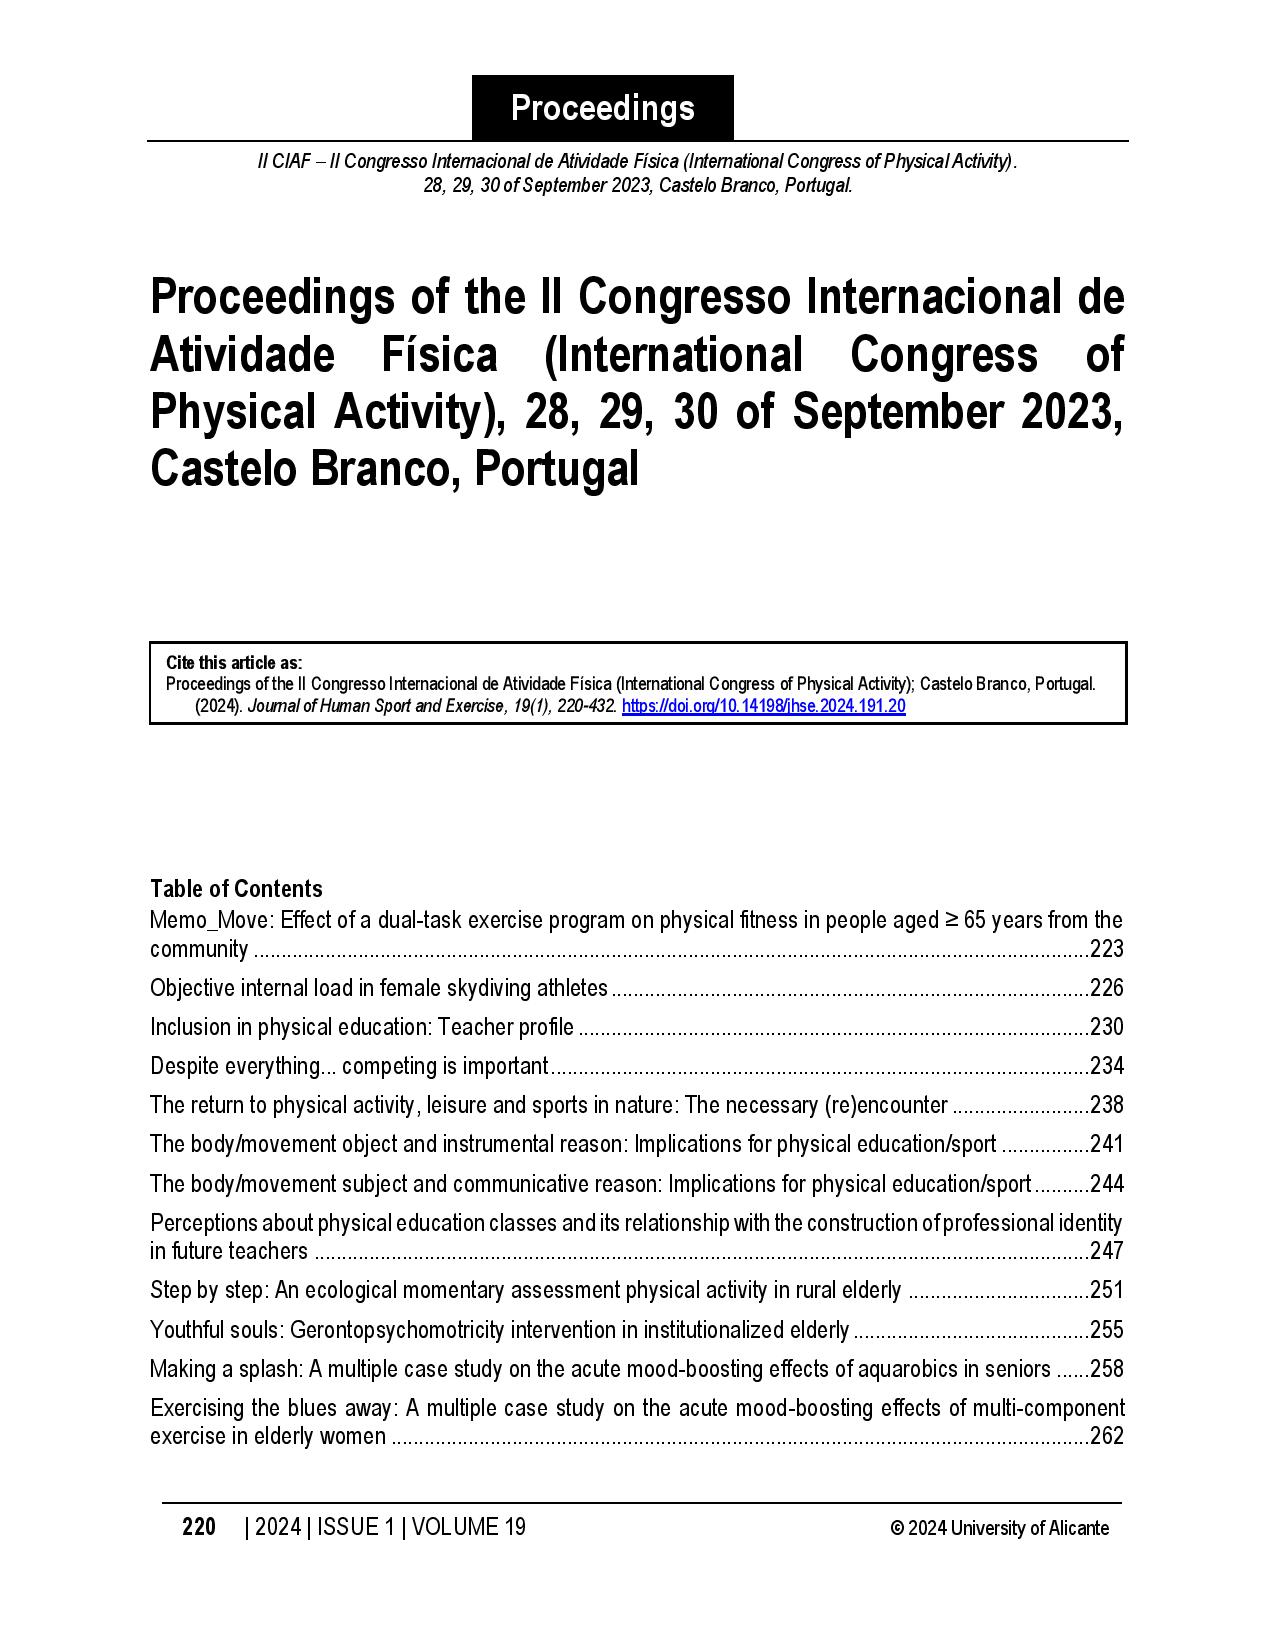 Proceedings of the II Congresso Internacional de Atividade Física (International Congress of Physical Activity), 28, 29, 30 of September 2023, Castelo Branco, Portugal